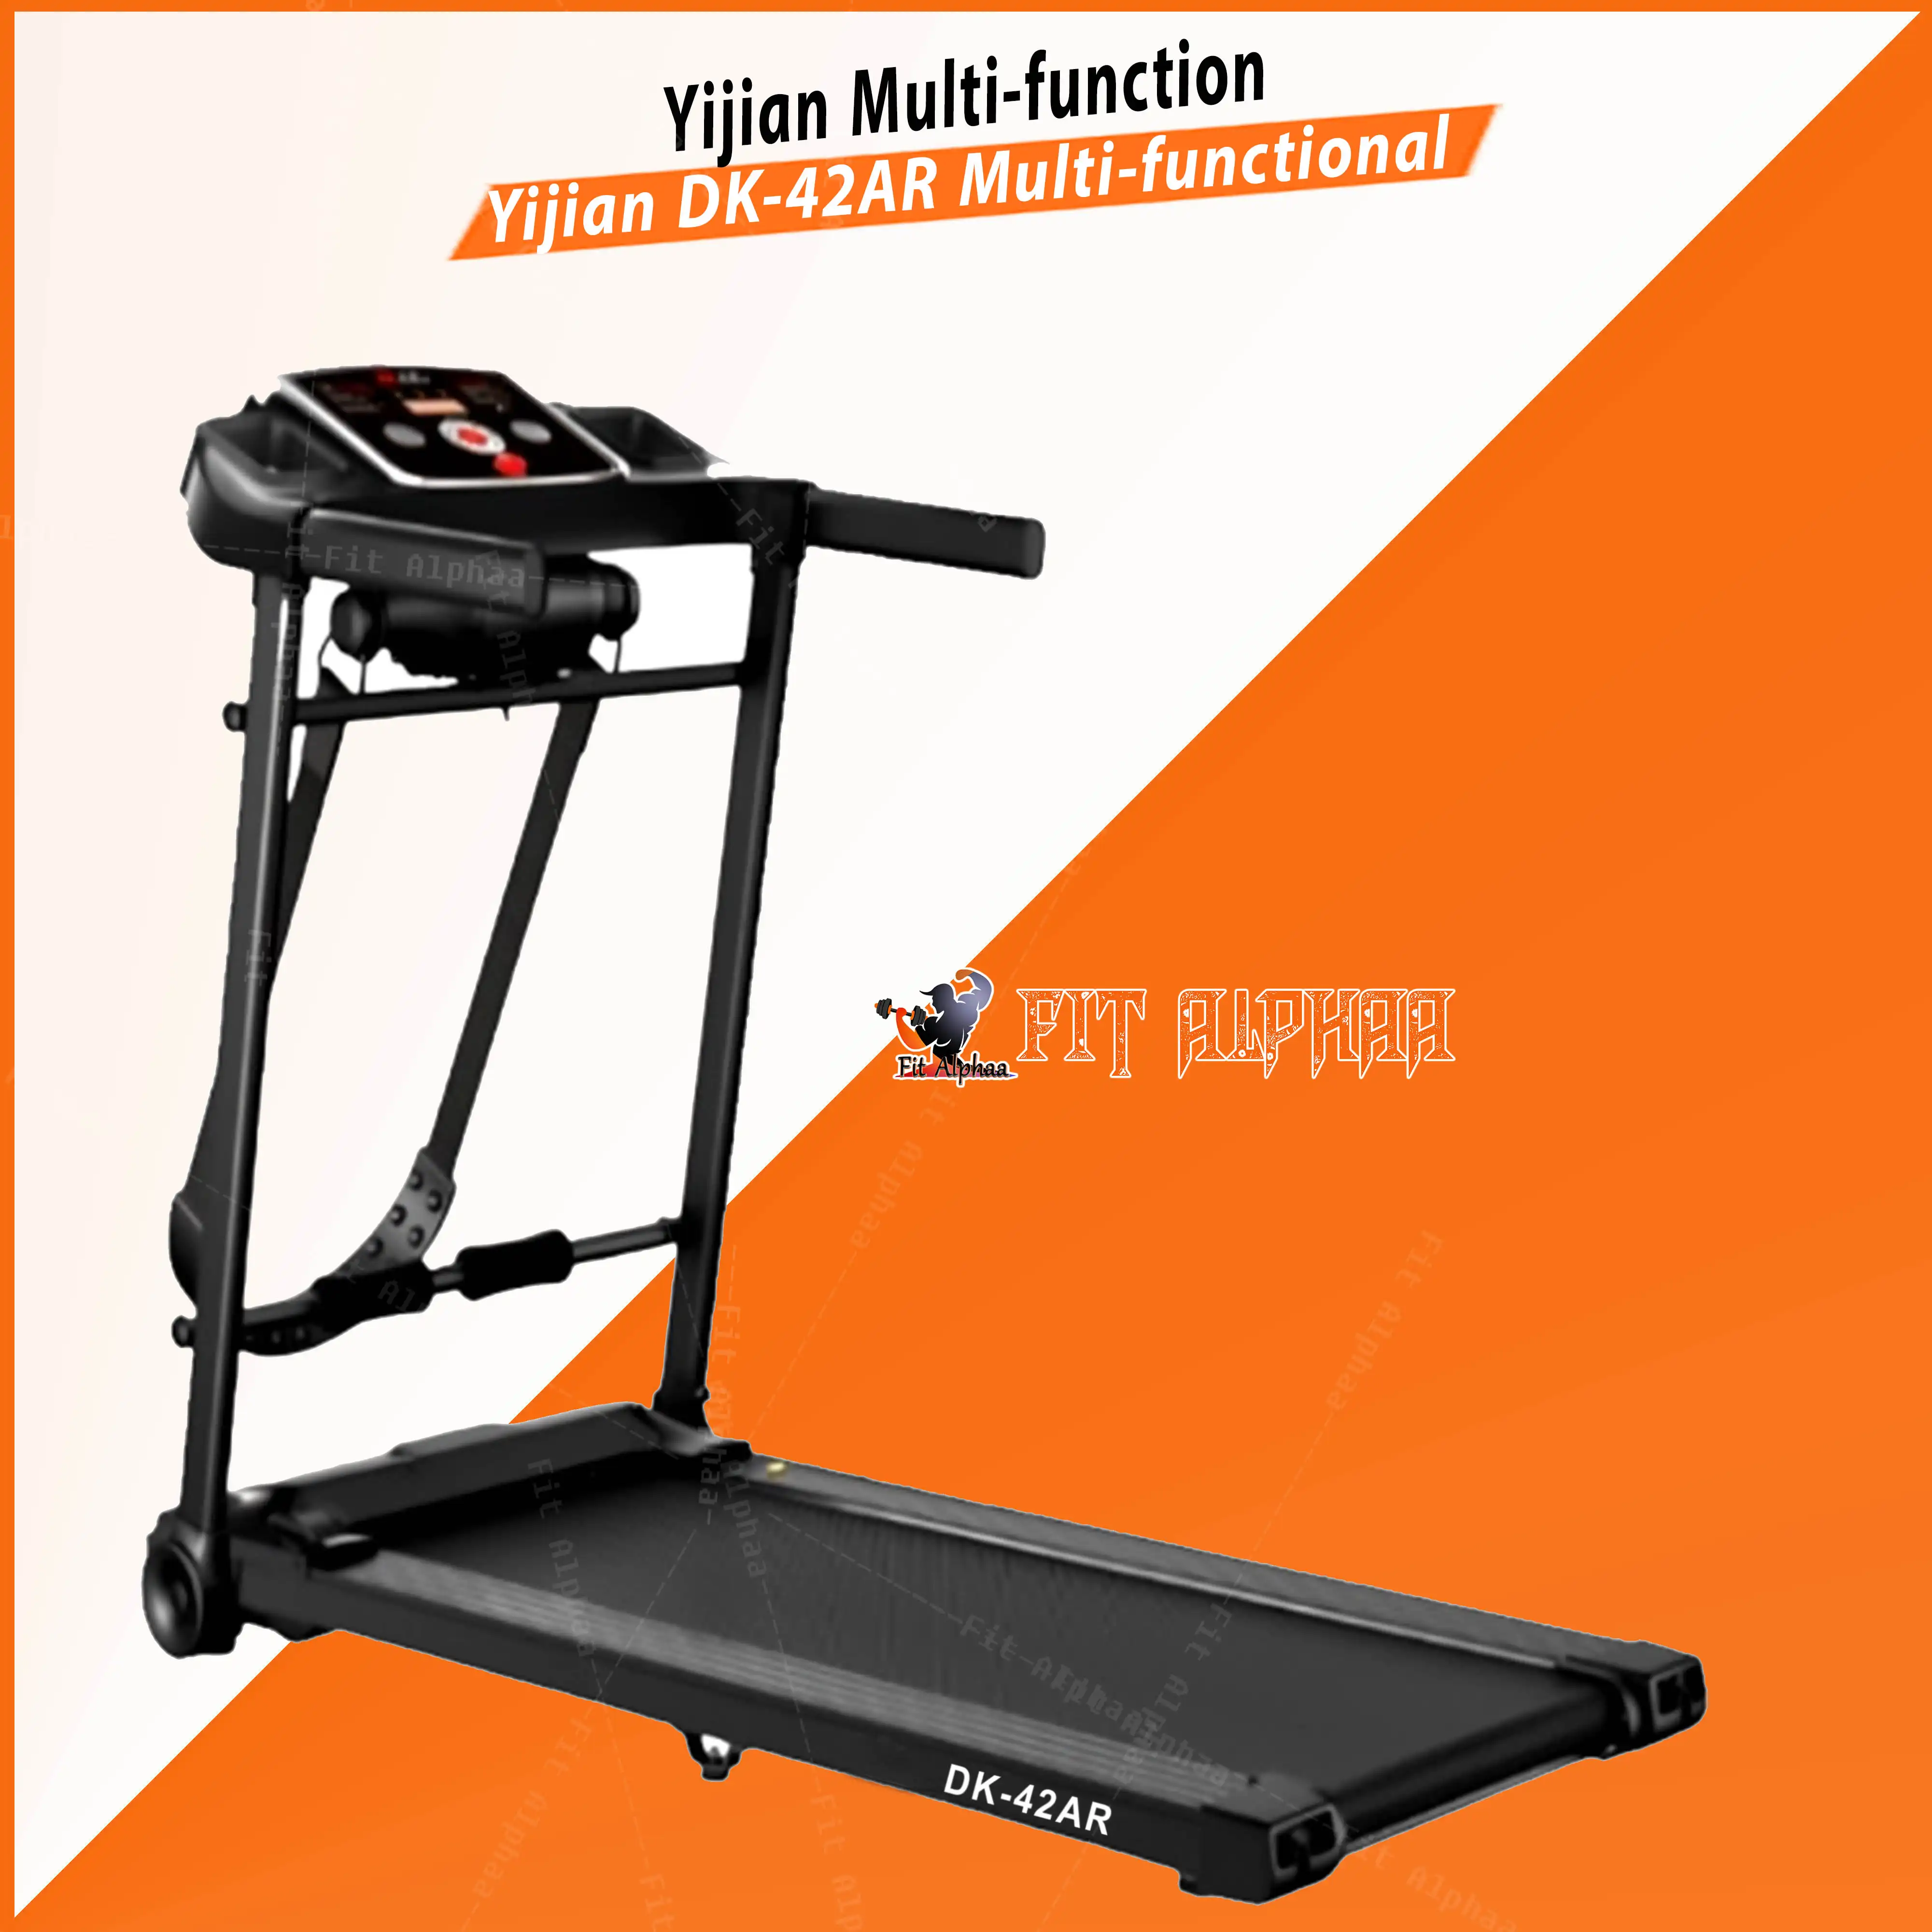 Yijian DK 42AR Multi-function Foldable Motorized Treadmill - Home Use Running Machine .